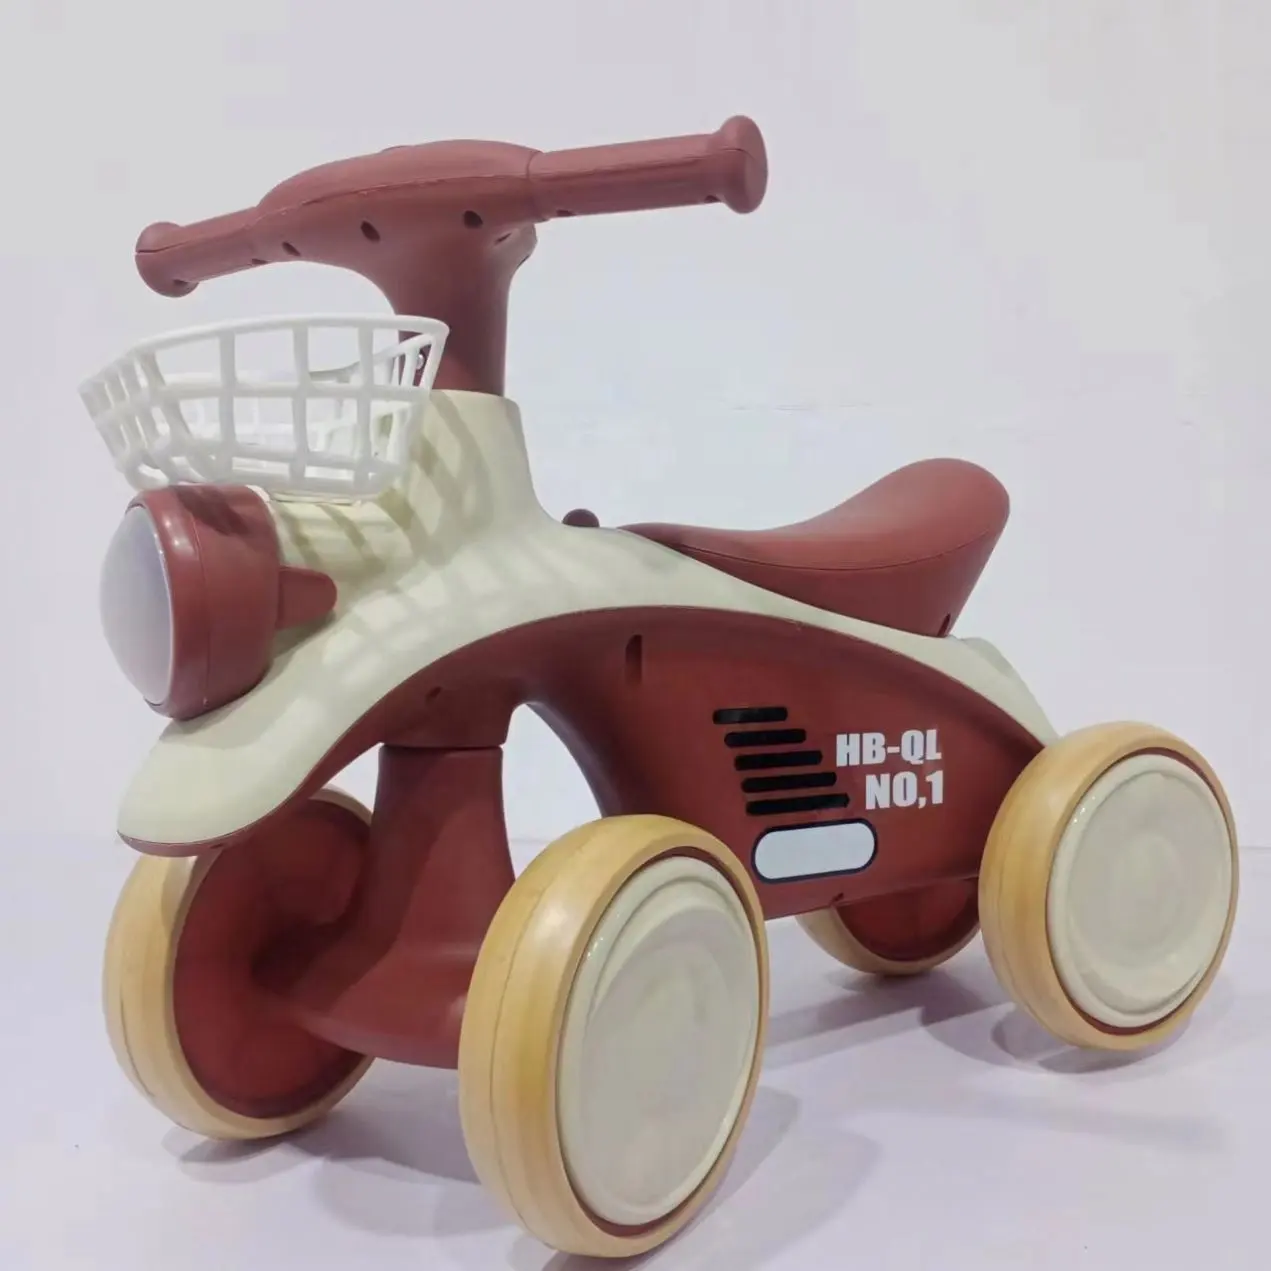 Mainan anak roda tiga, mainan dorong untuk anak usia 1 tahun desain baru